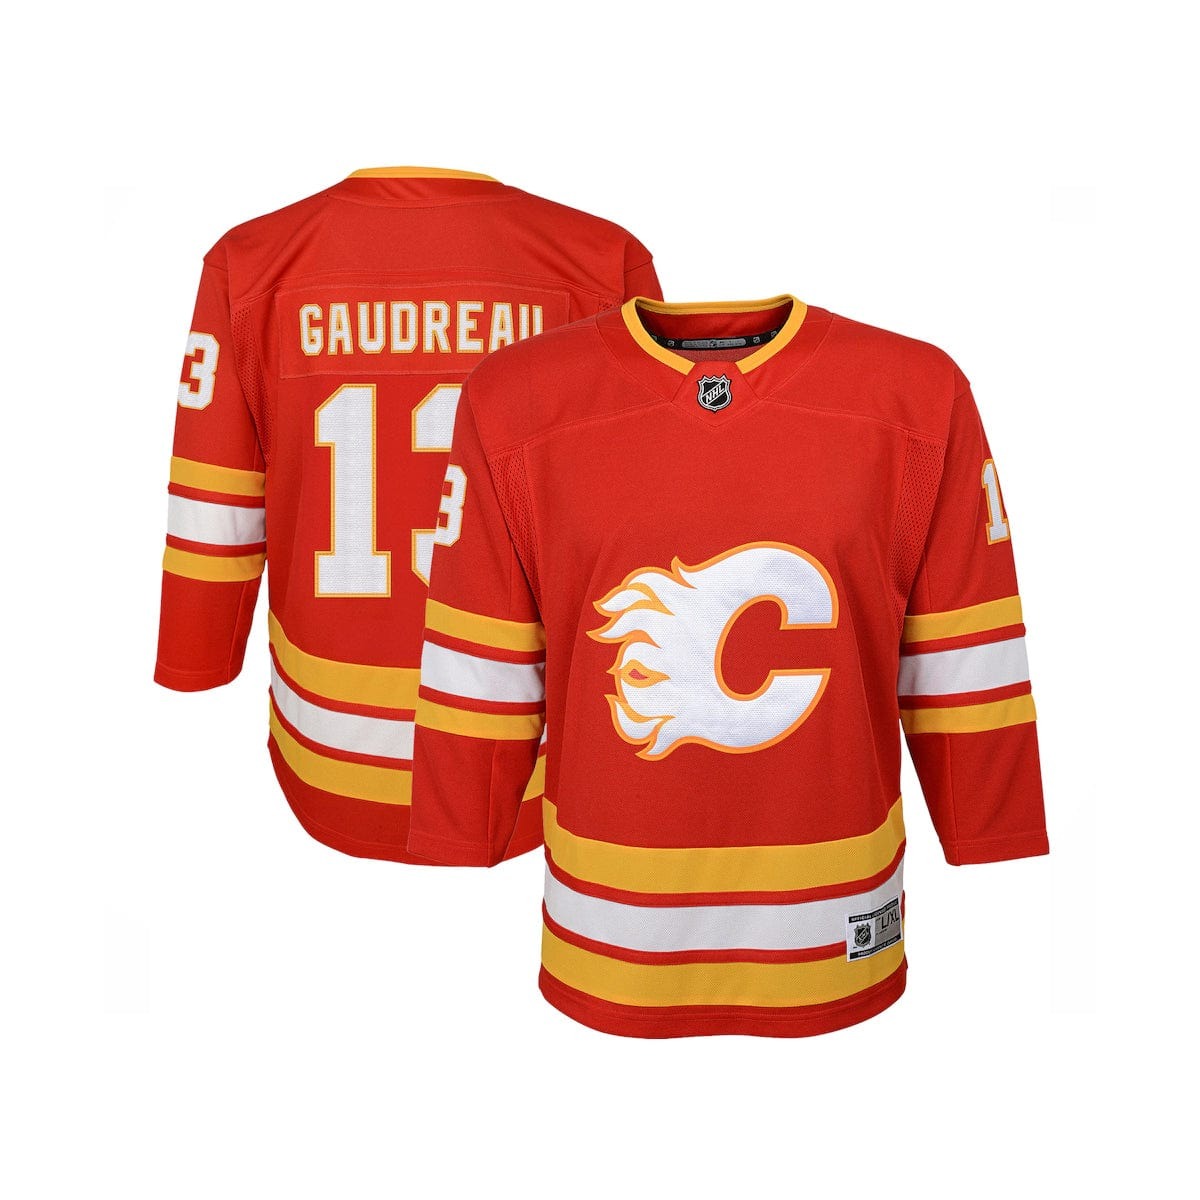 Calgary Flames Home Outer Stuff Premier Junior Jersey - Johnny Gaudreau